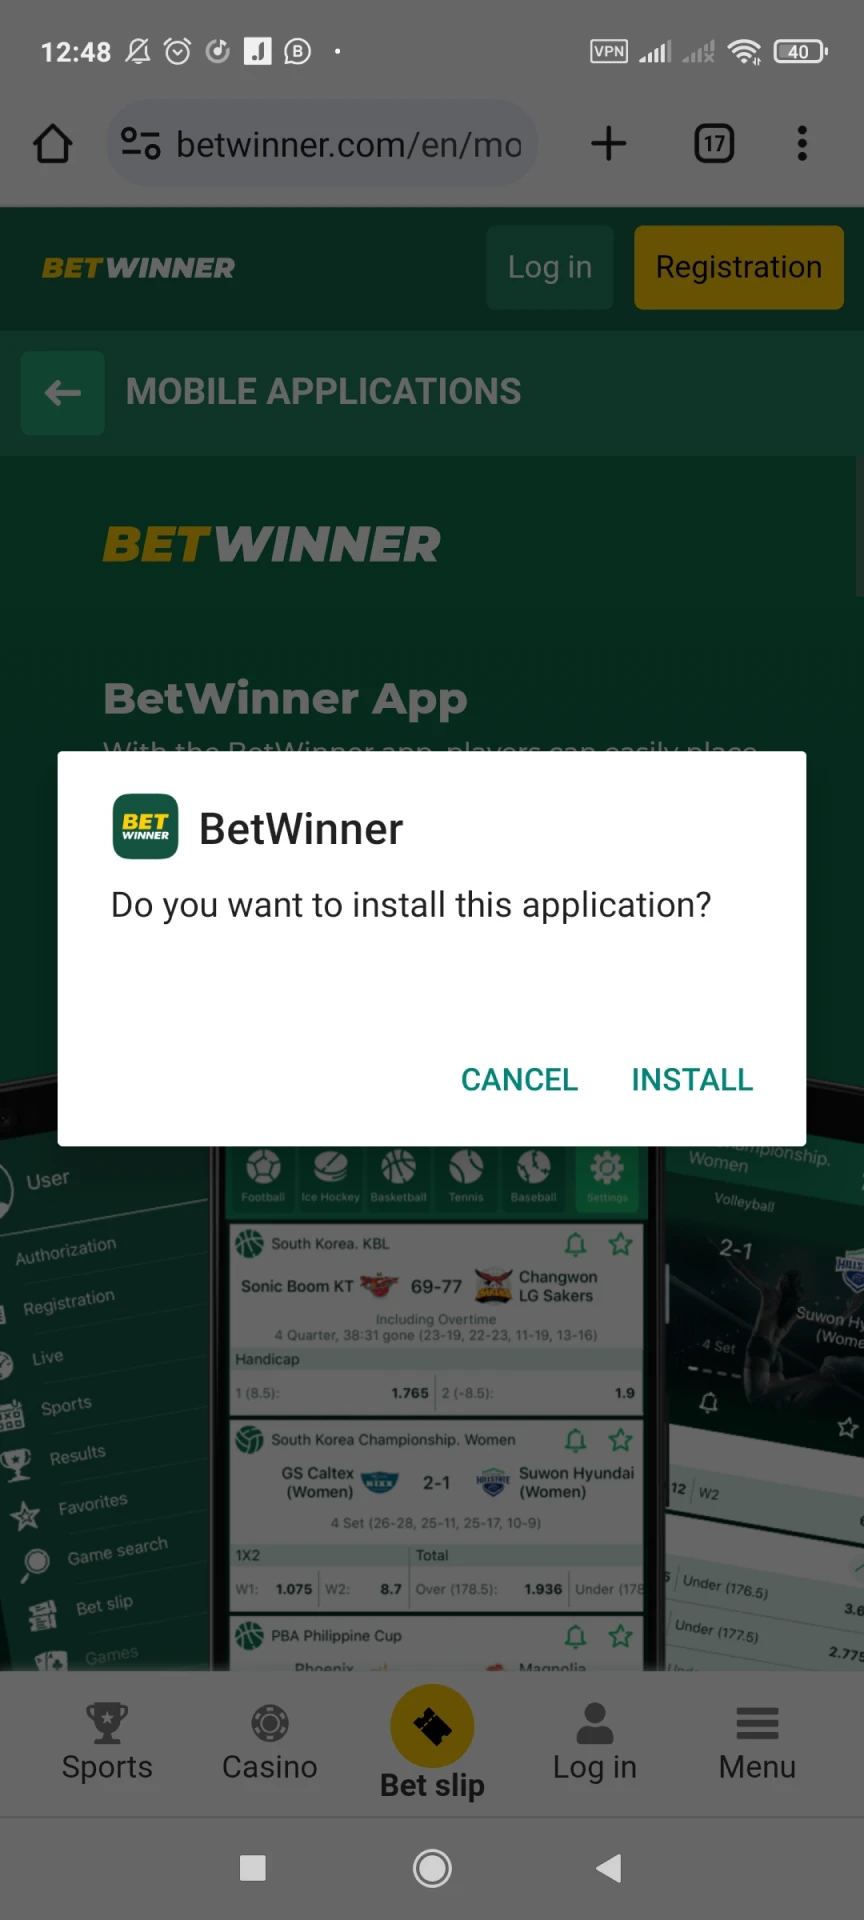 Comece a instalar o aplicativo Betwinner para Android.